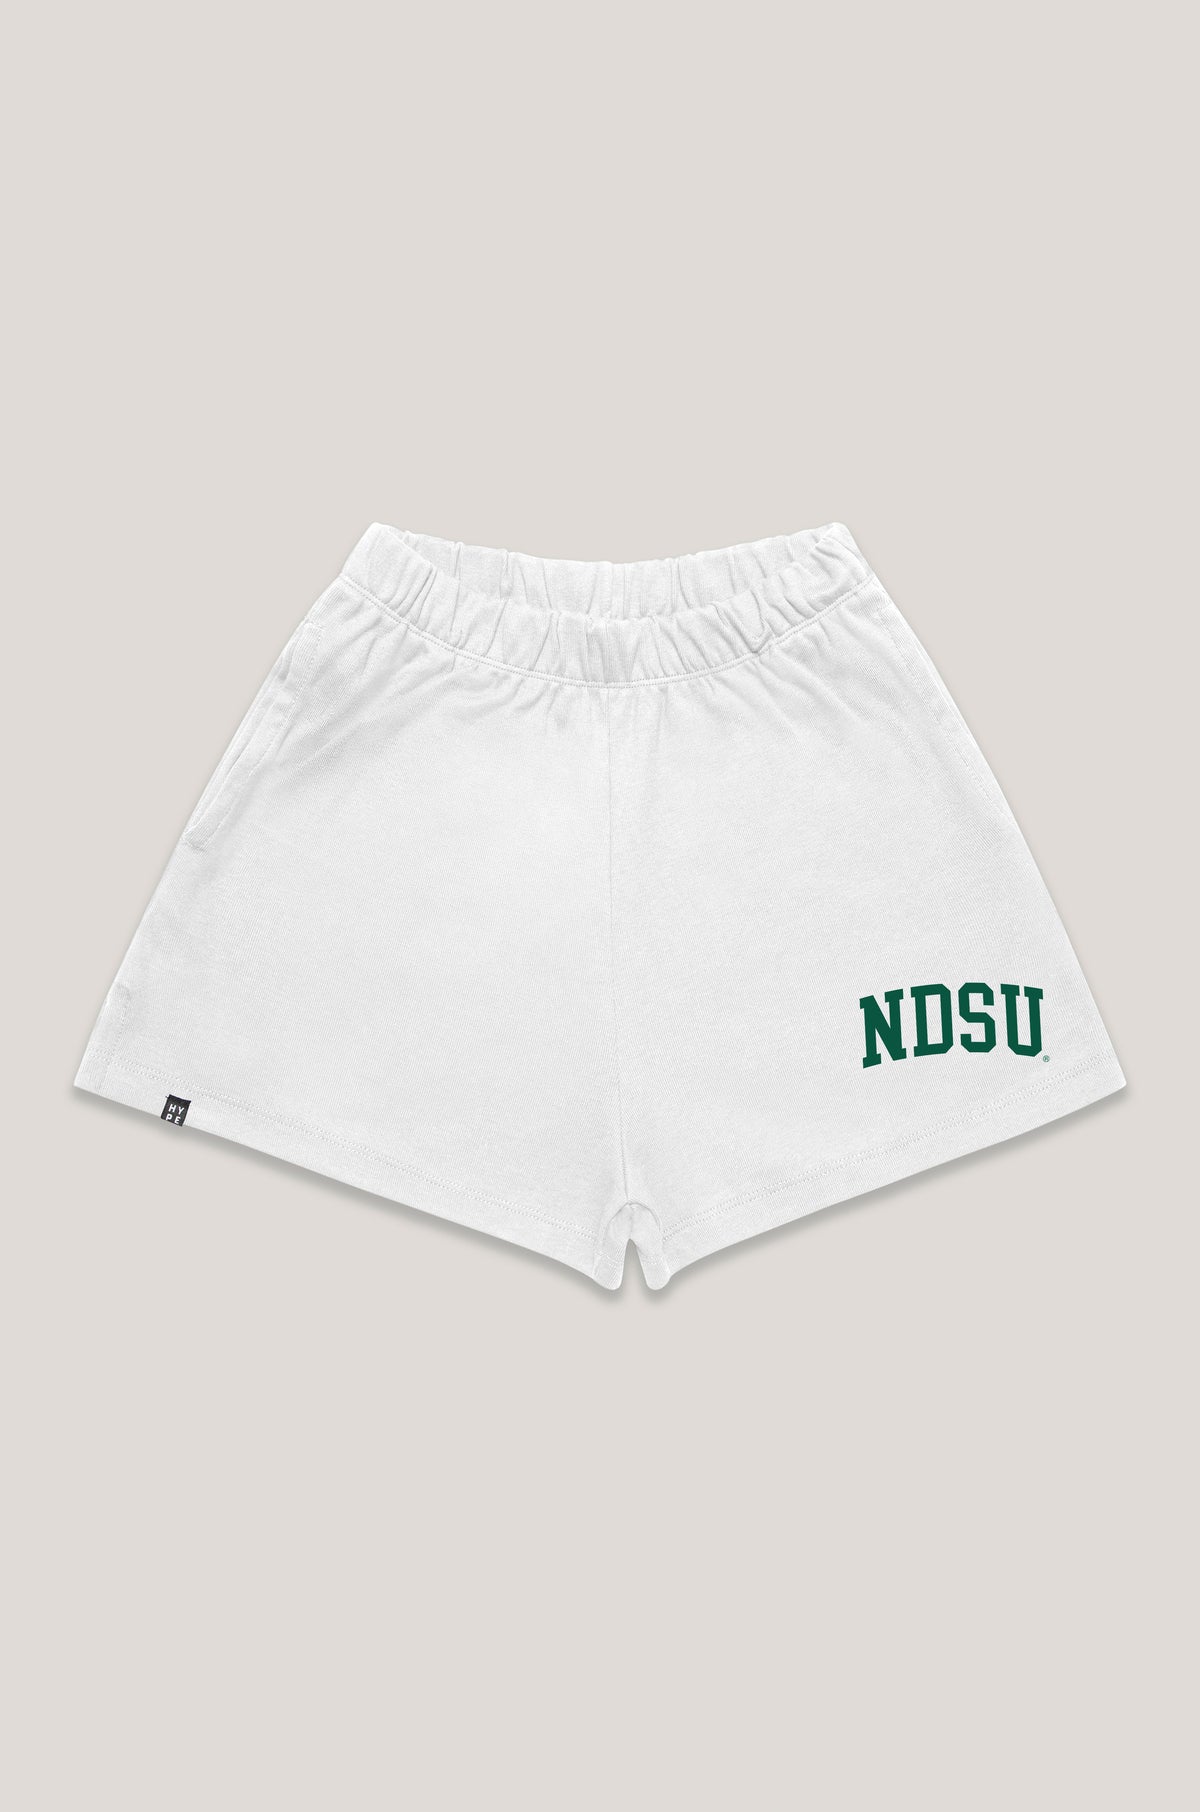 NDSU Track Shorts